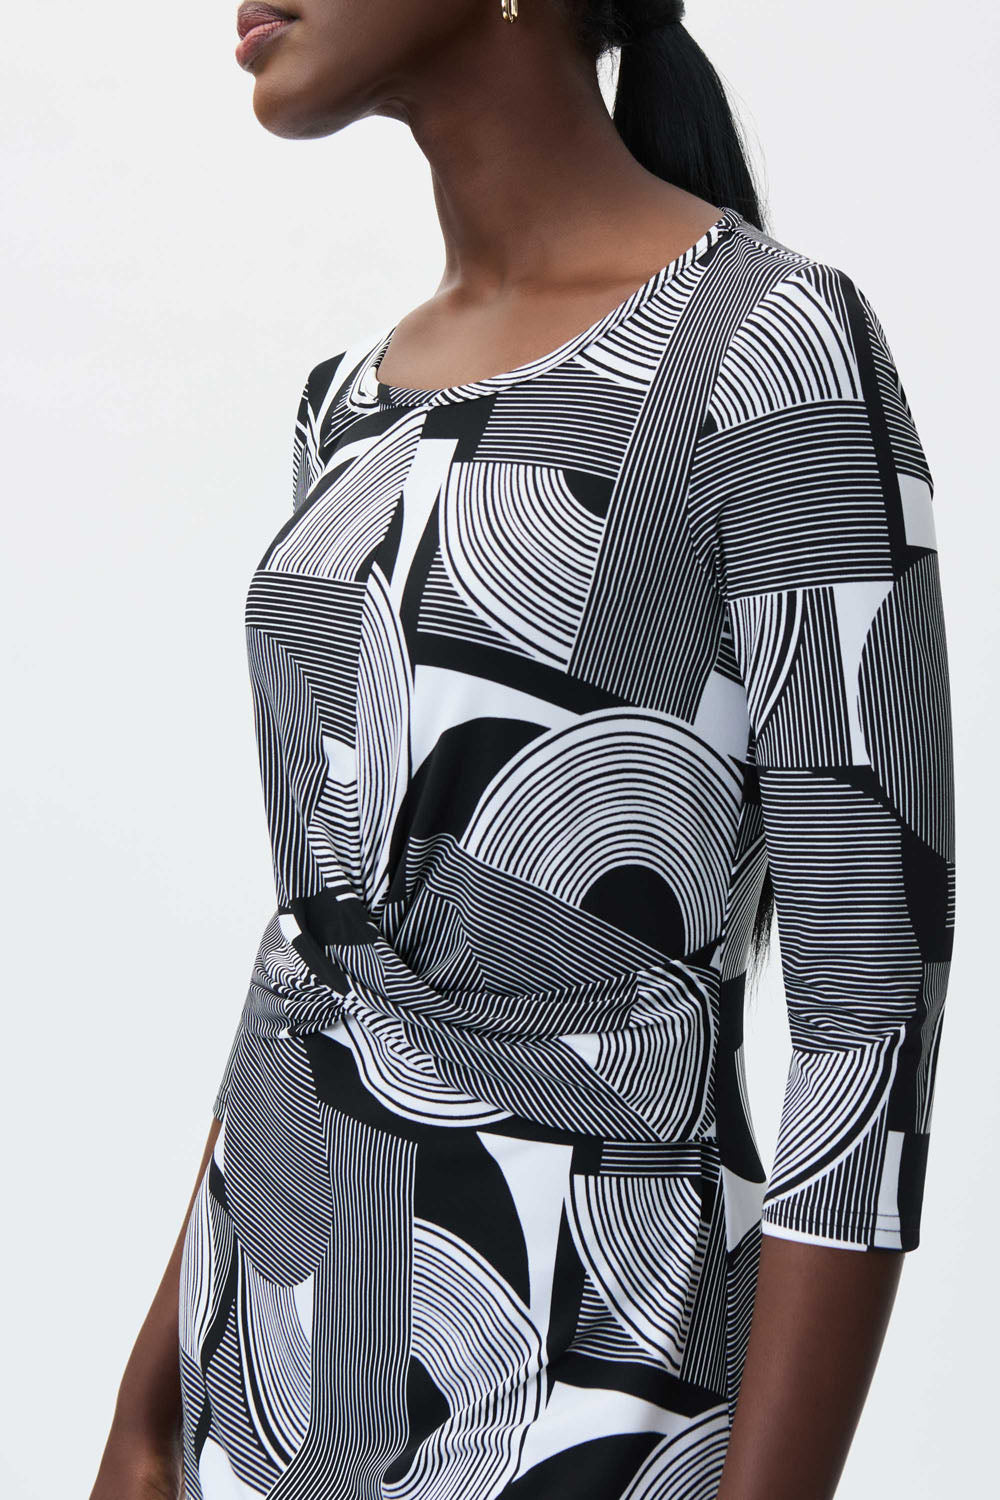 Joseph Ribkoff Vanilla-Black Geometric Print Dress Style 231020